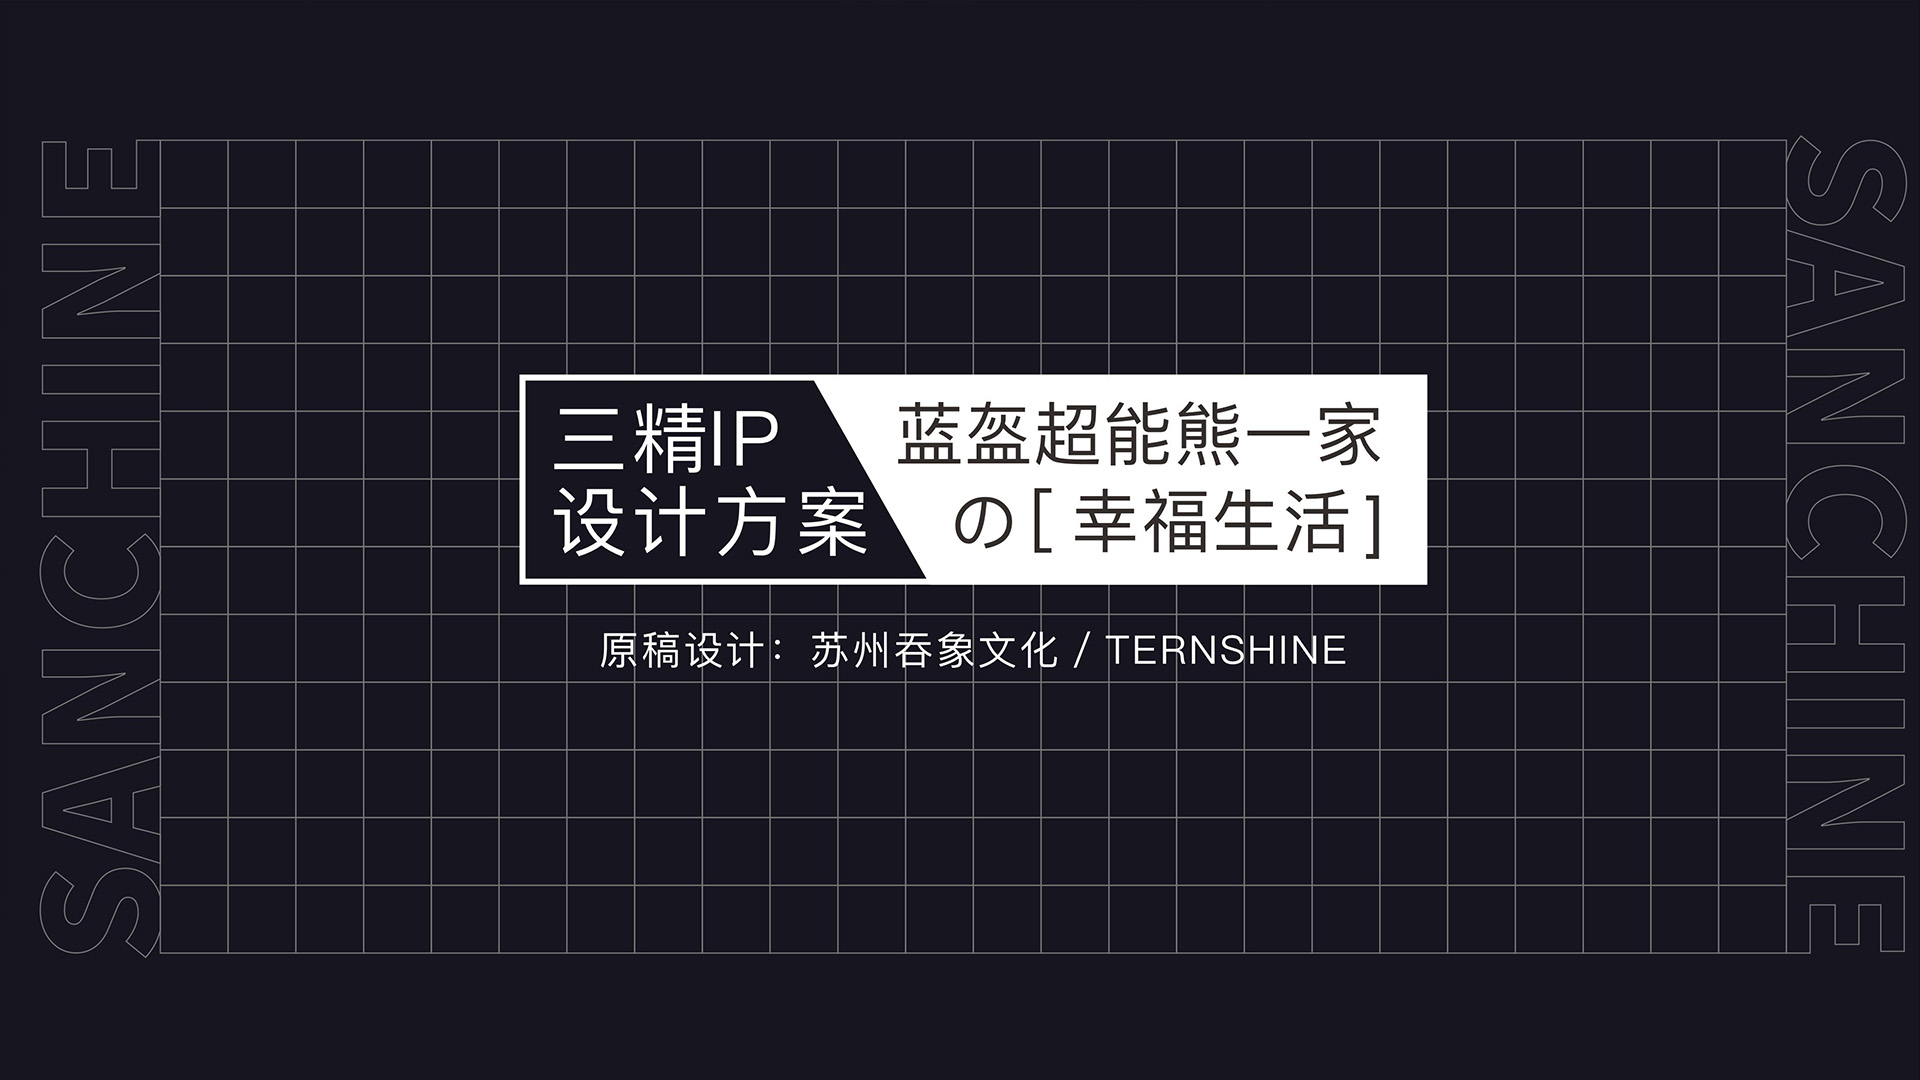 吞象文化/TERNSHINE